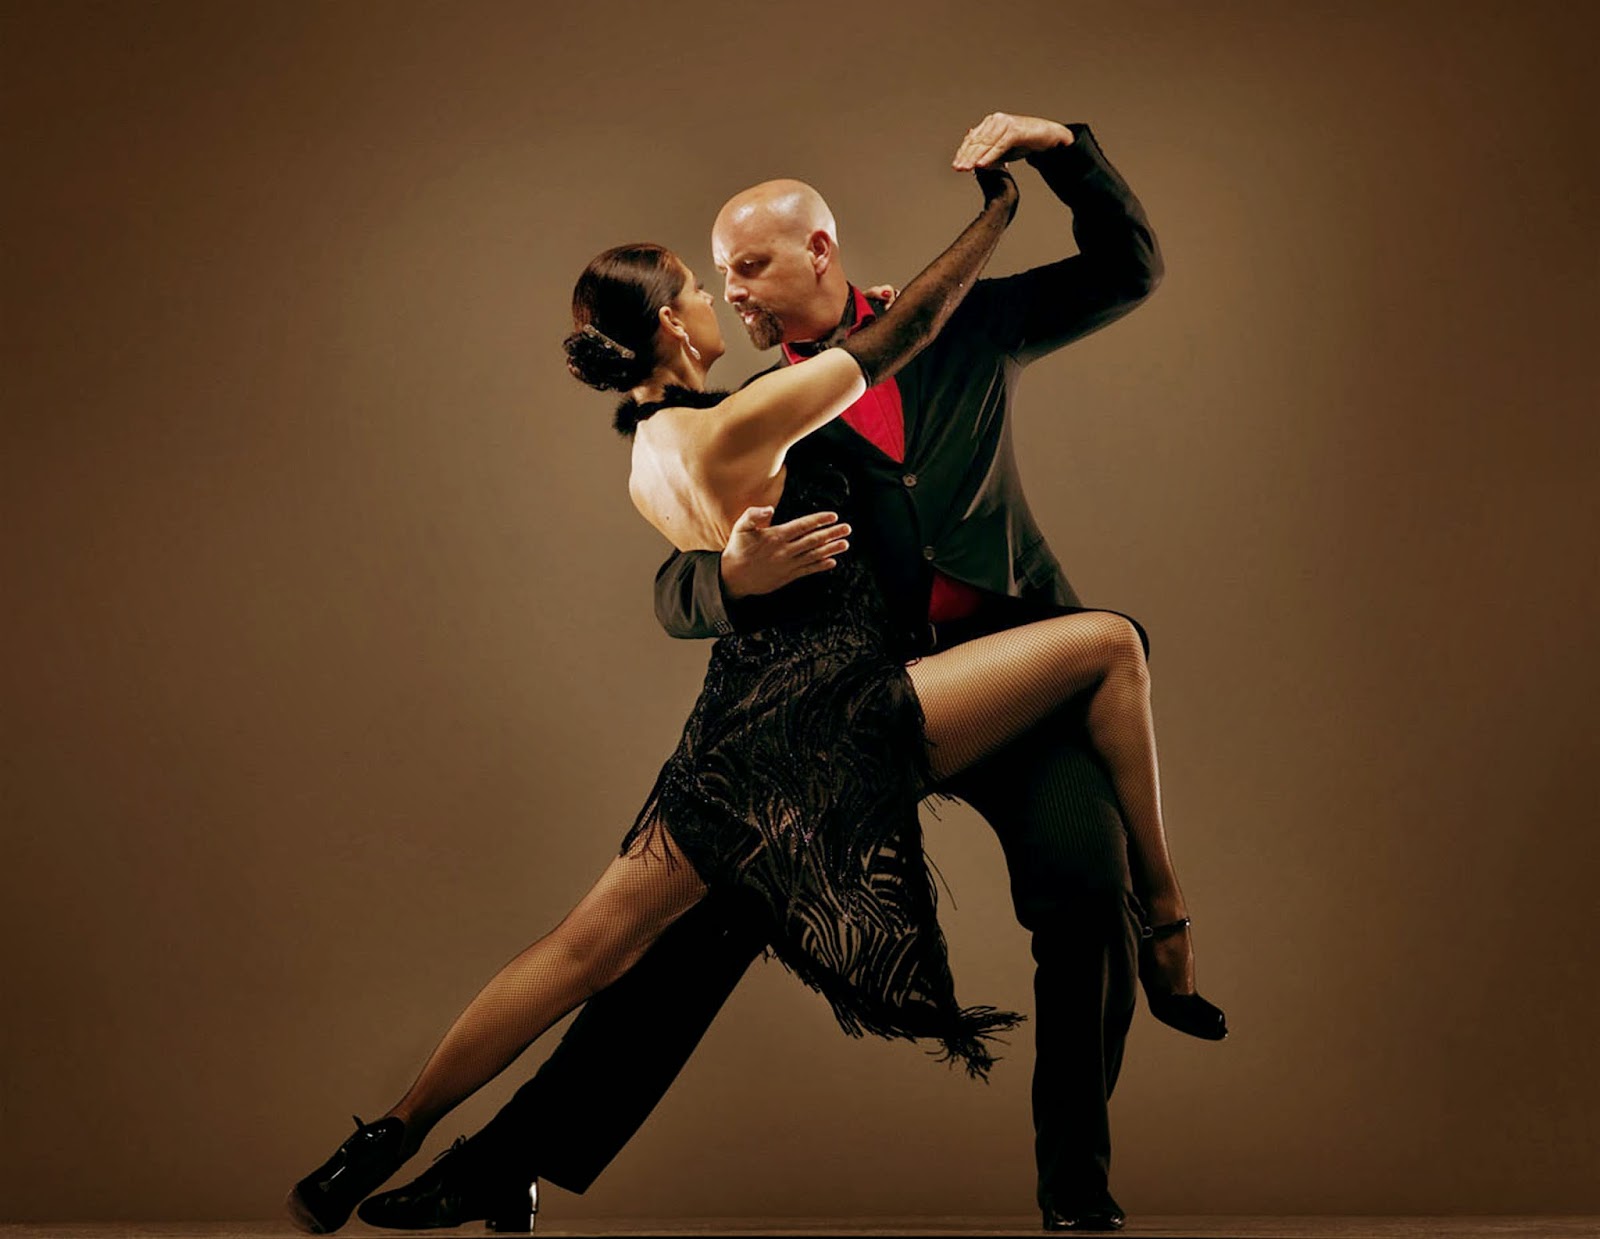 PATOLOGIA CLINICA: Tango dancing benefits Parkinson's patients